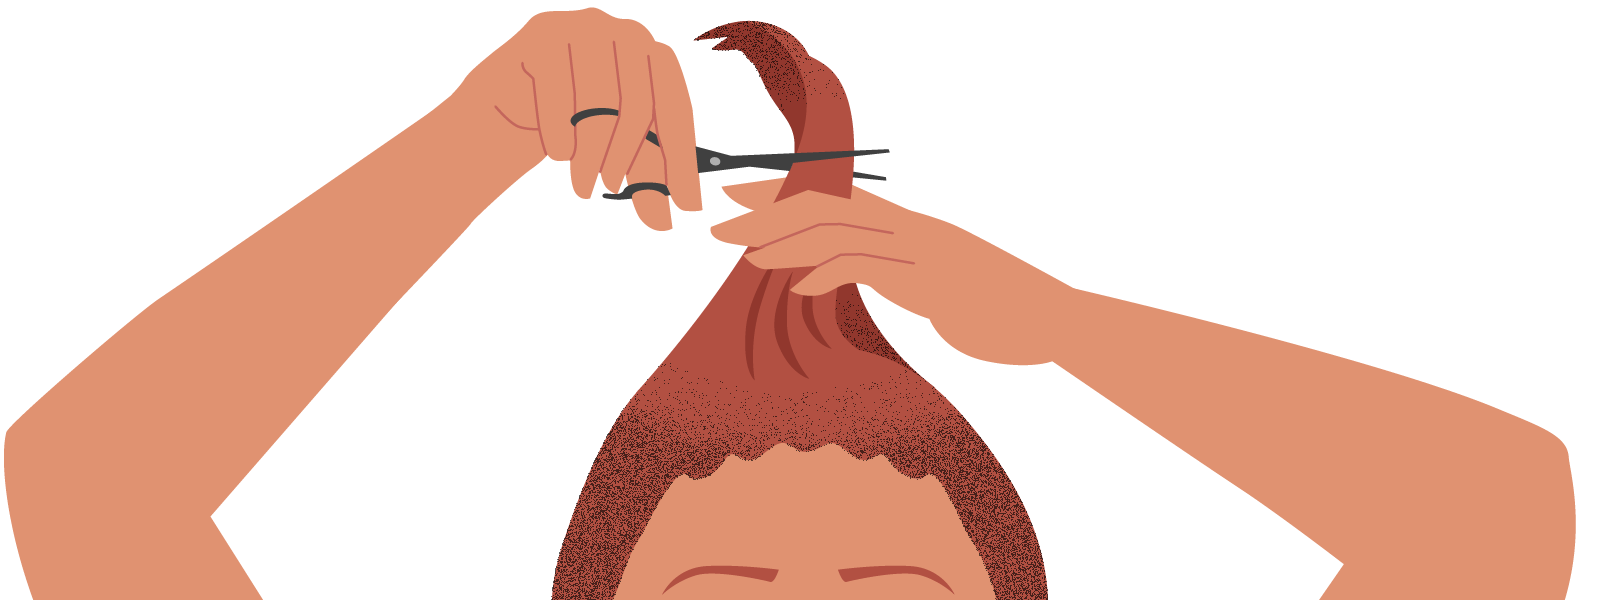 hair clippers for women's short hair